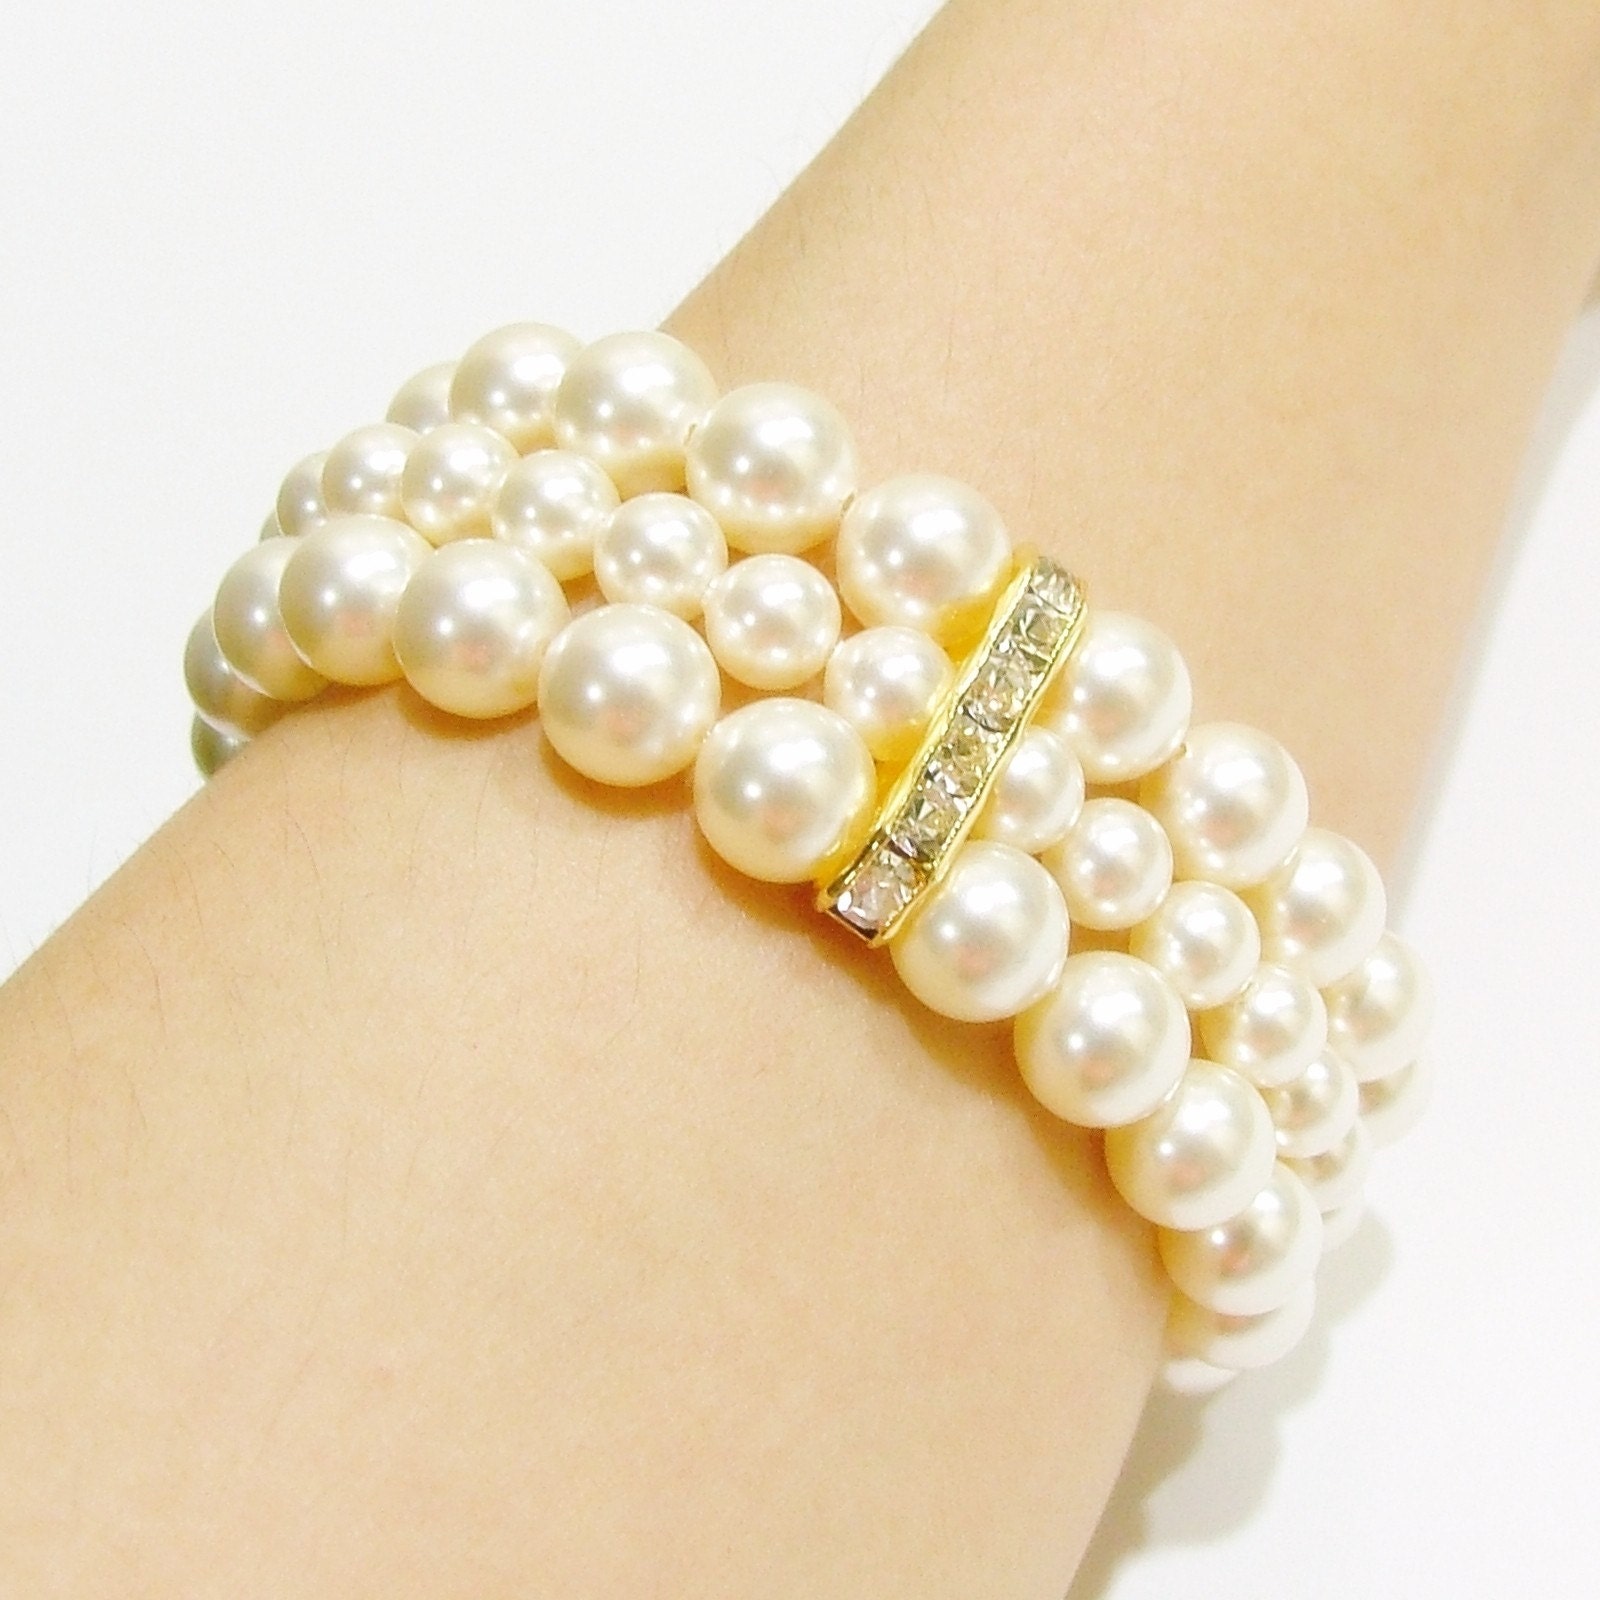 Elegant Pearl Bracelet - 3 Strands and Spacers